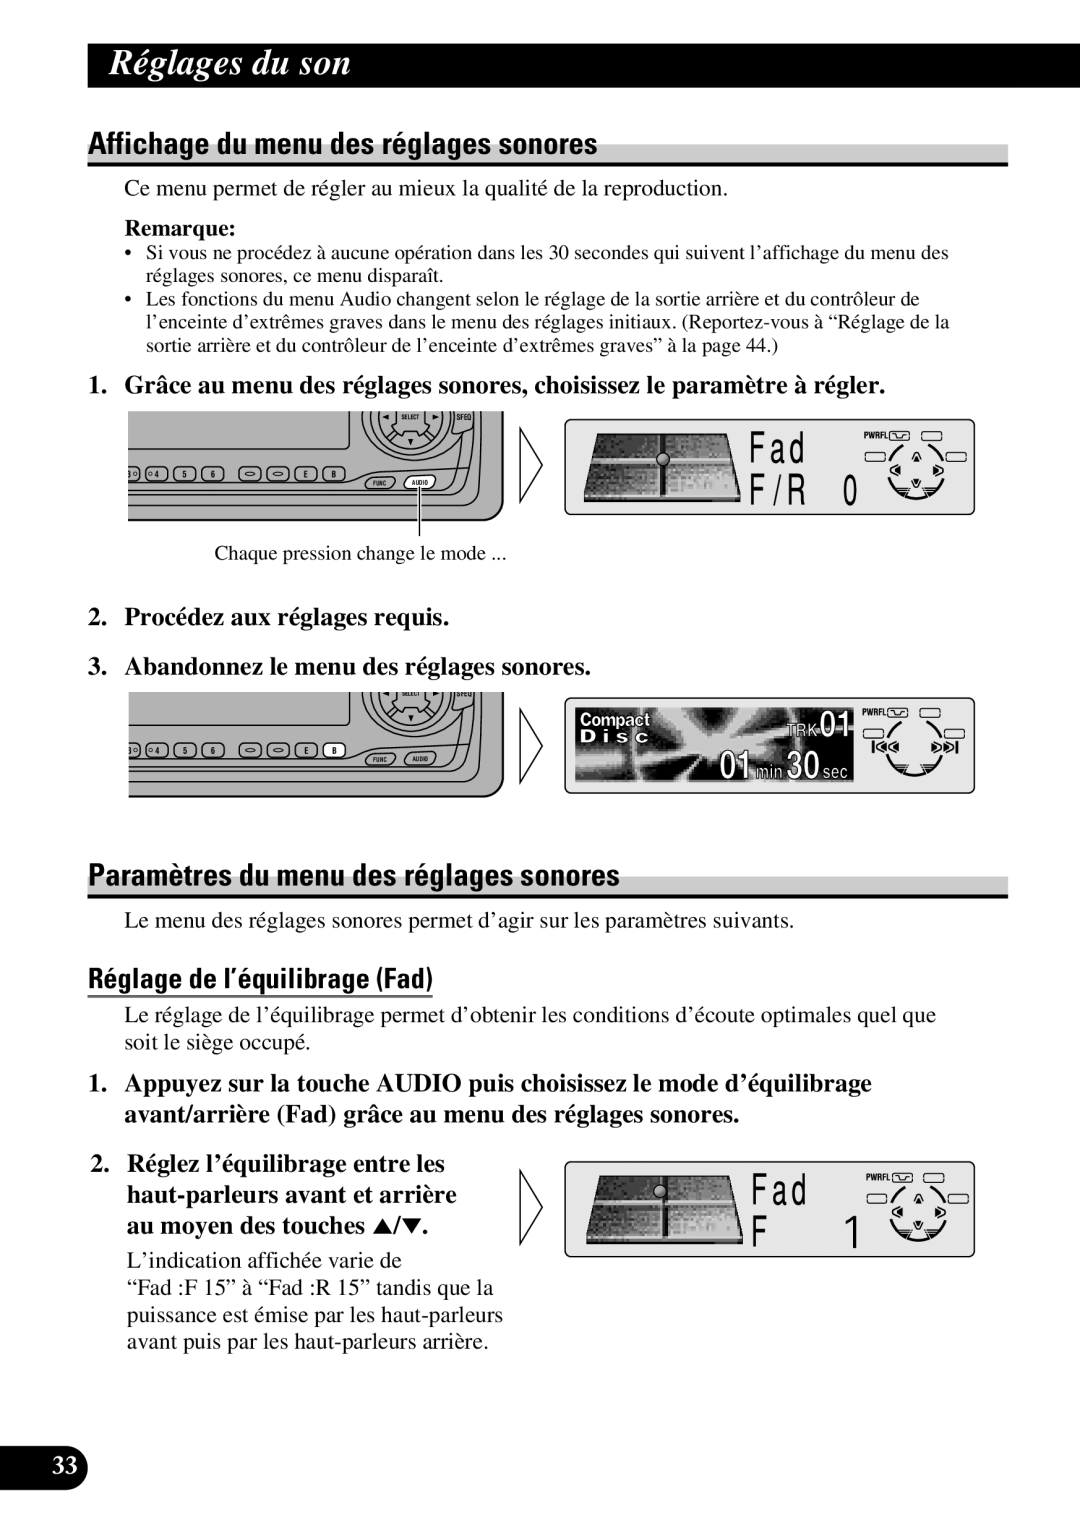 Pioneer DEH-P6300, DEH-P7300 Affichage du menu des réglages sonores, Paramètres du menu des réglages sonores, Remarque 